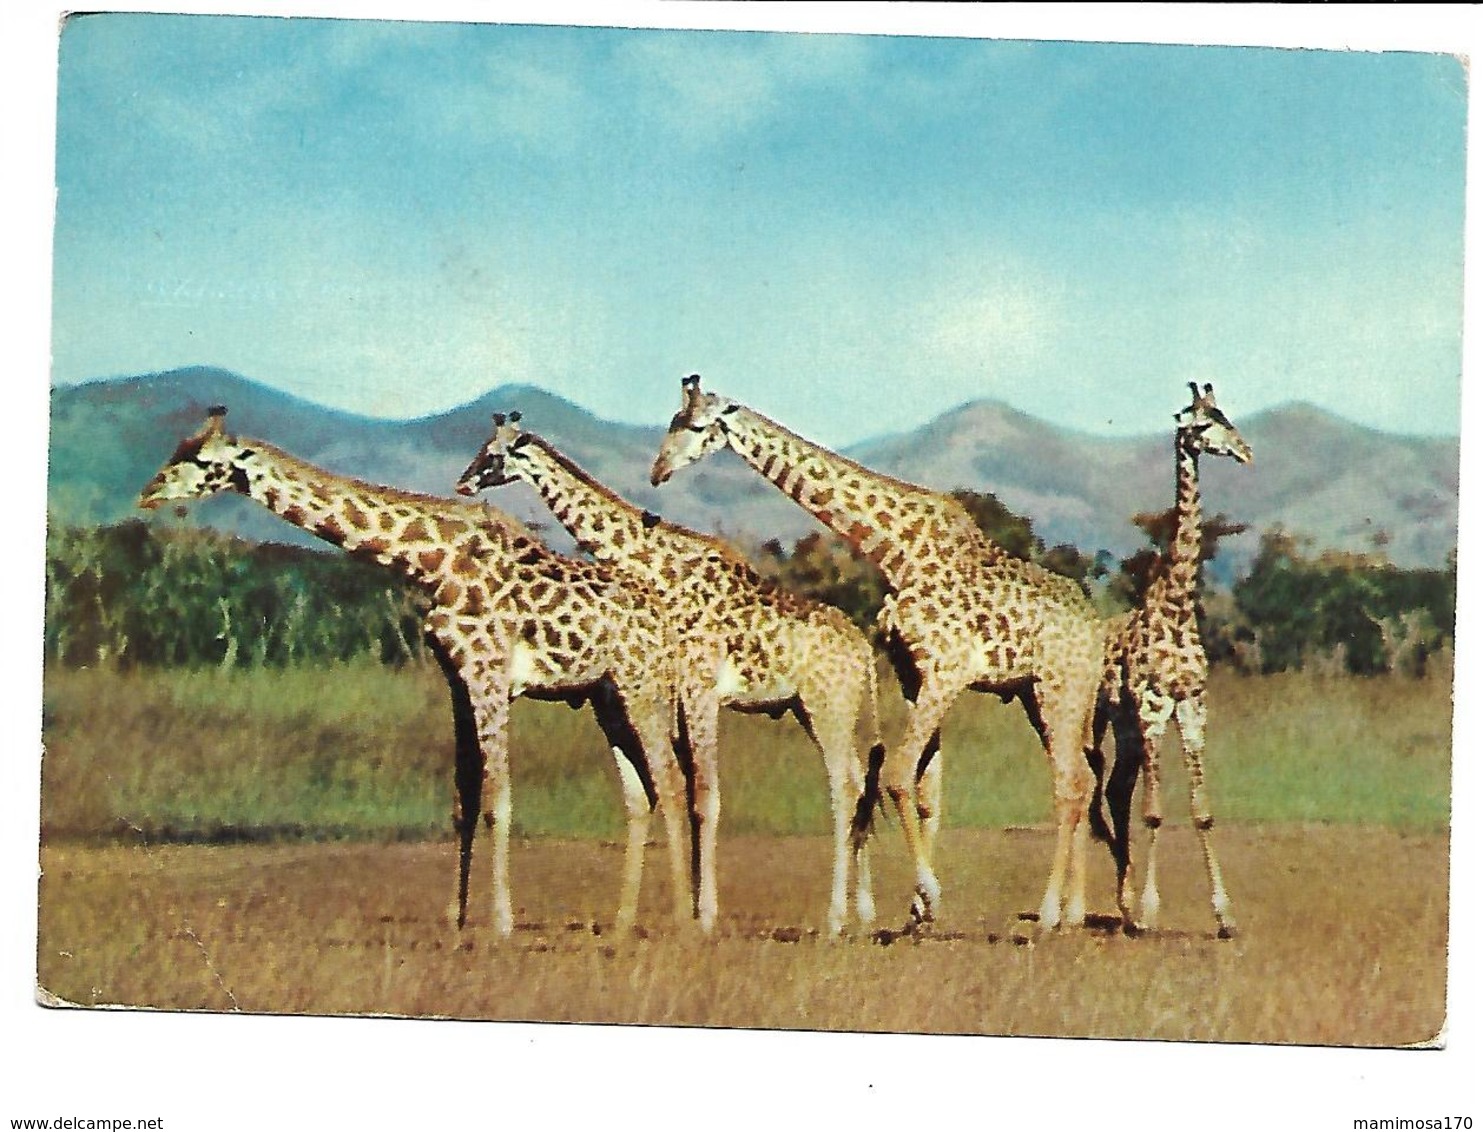 Afrique-BASUTOLAND-Une Vue Des Giraffes-PUB.Colection AMORA-TIMBRE-Obliteration-1956 - Non Classificati